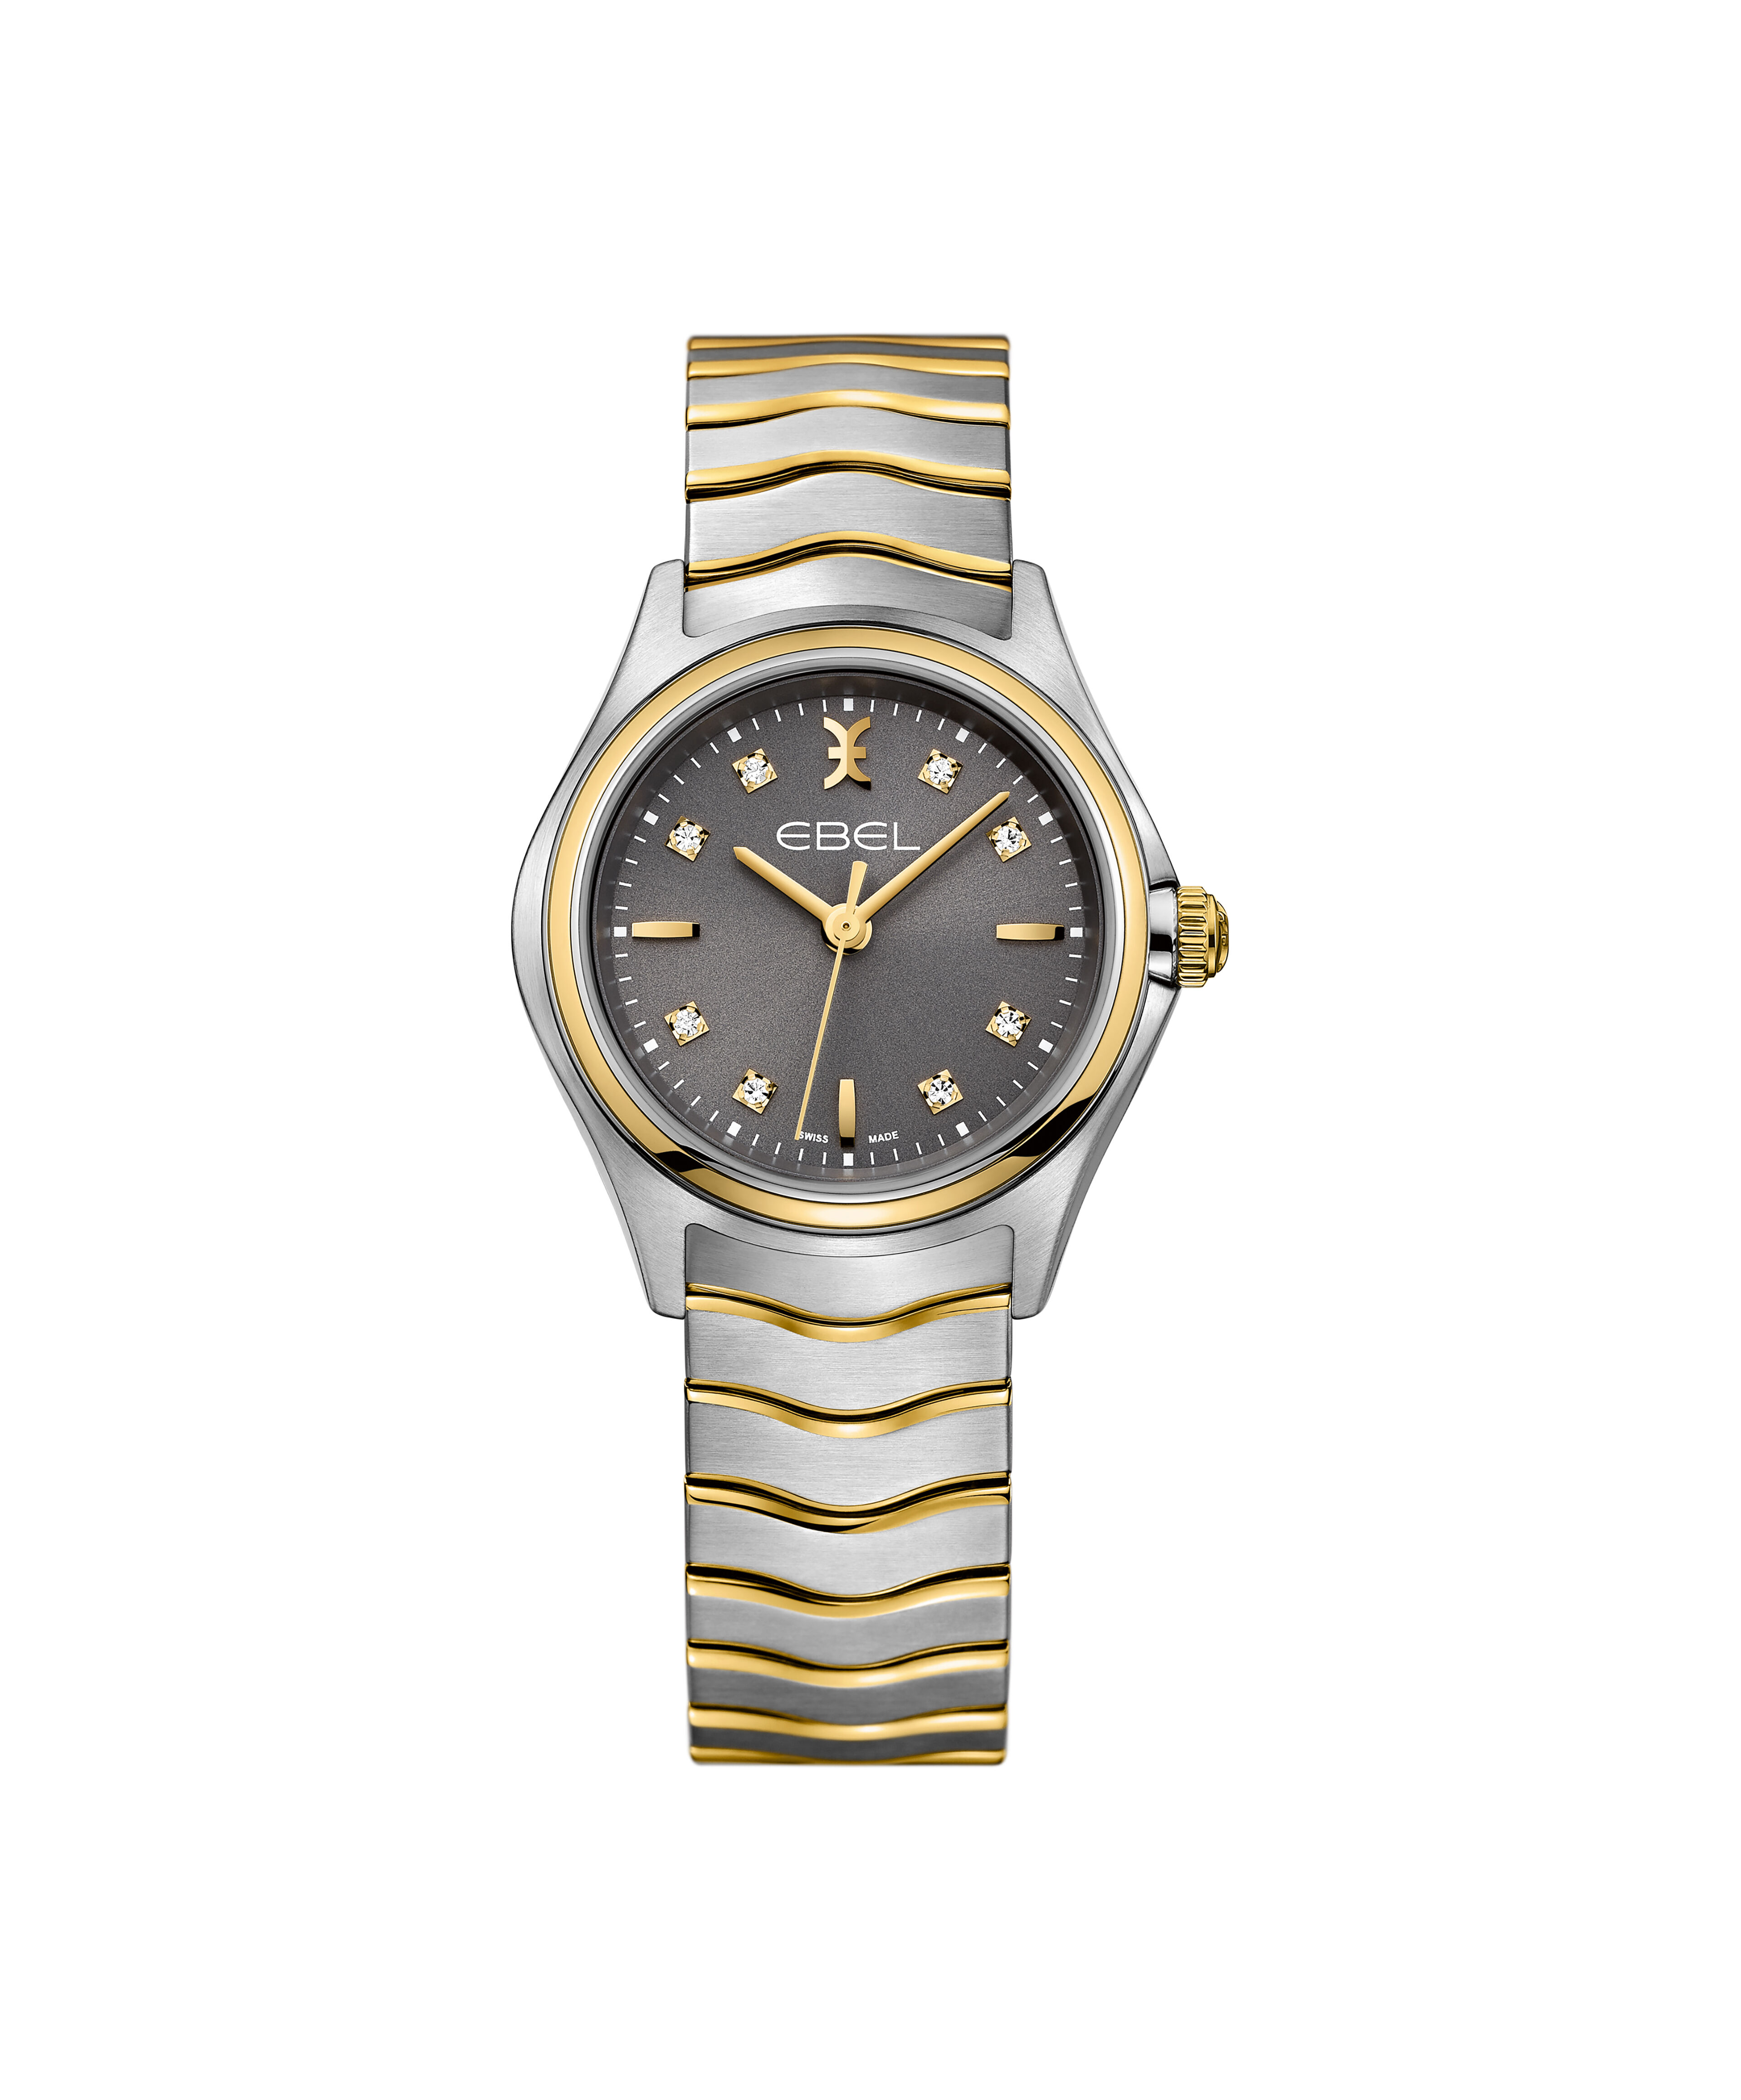 Dhgate Fake Luxury Watches